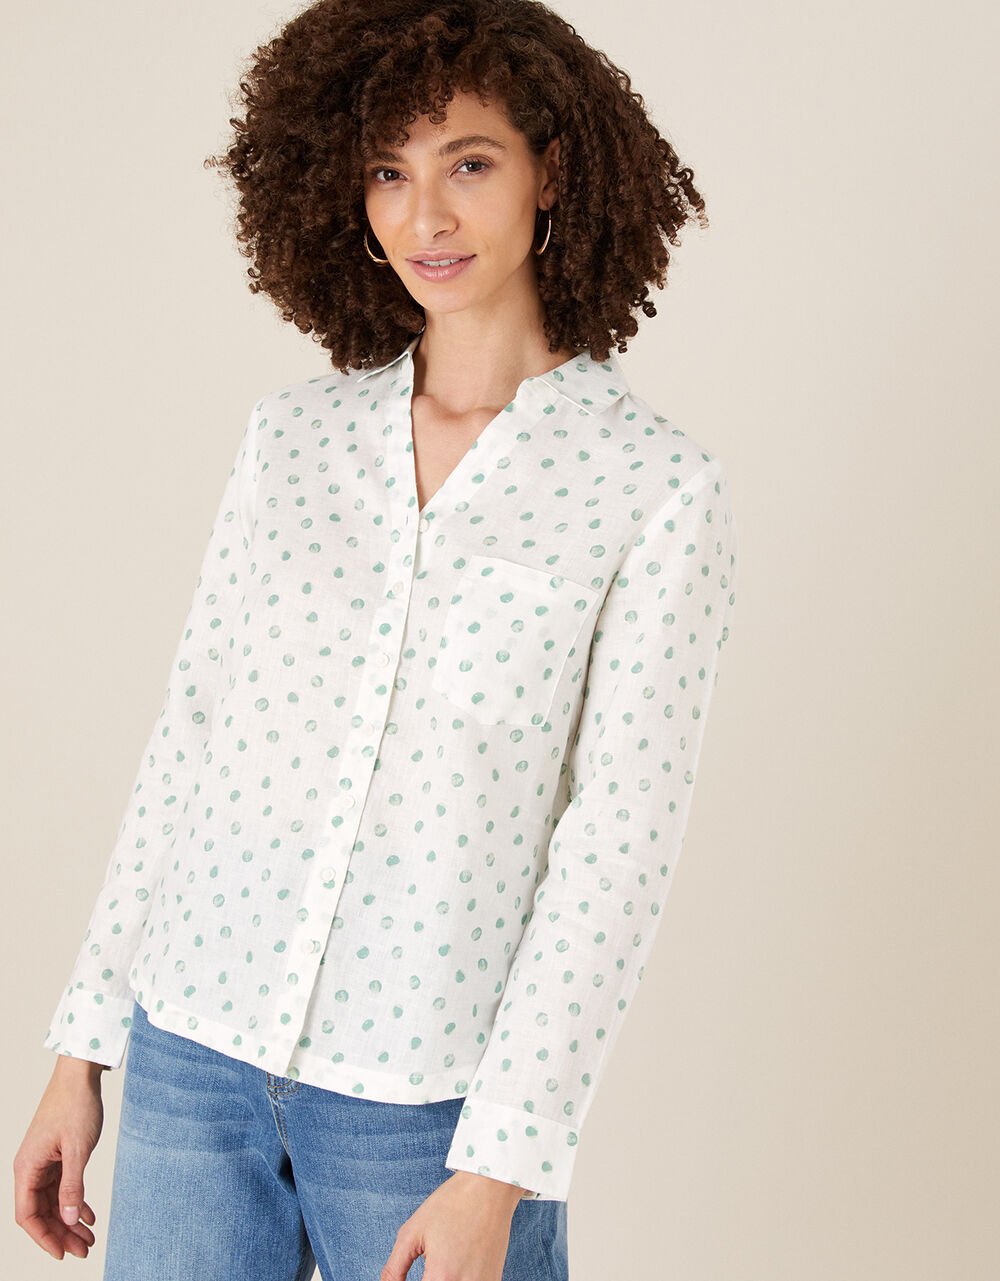 Women Women's Clothing | Patsy Spot Shirt in Pure Linen Ivory - VM90098